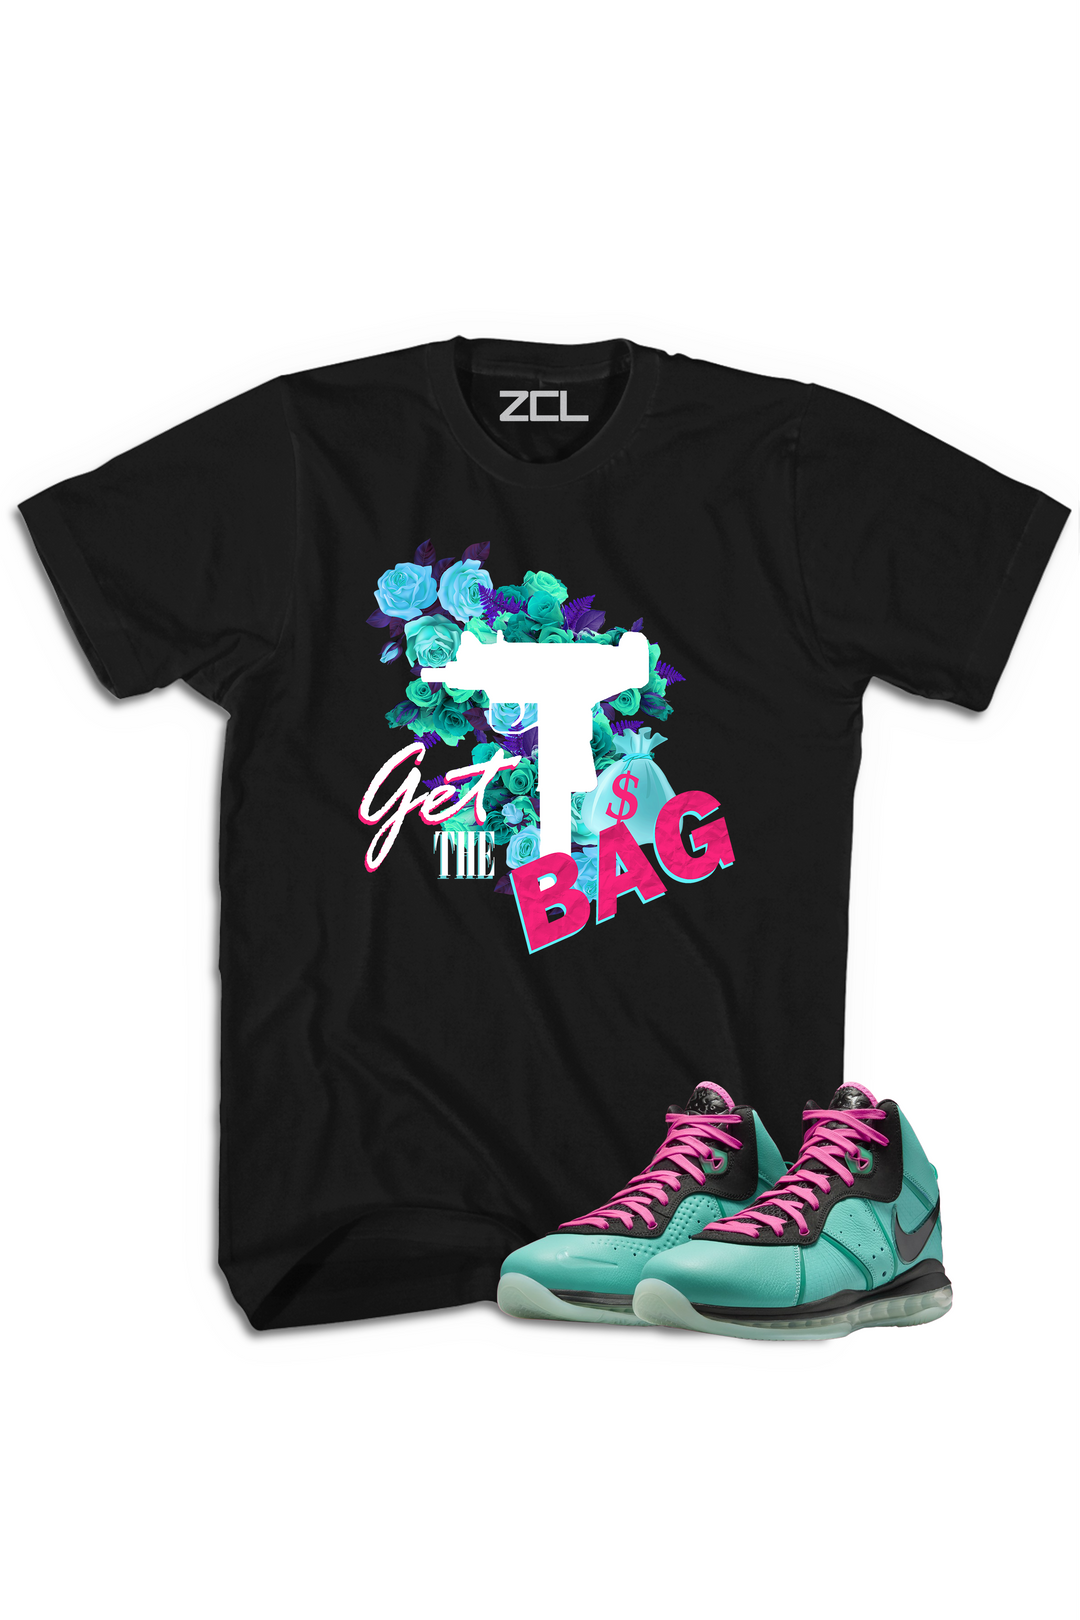 Nike Lebron 8 "Get The Bag" Tee South Beach 2021 - Zamage